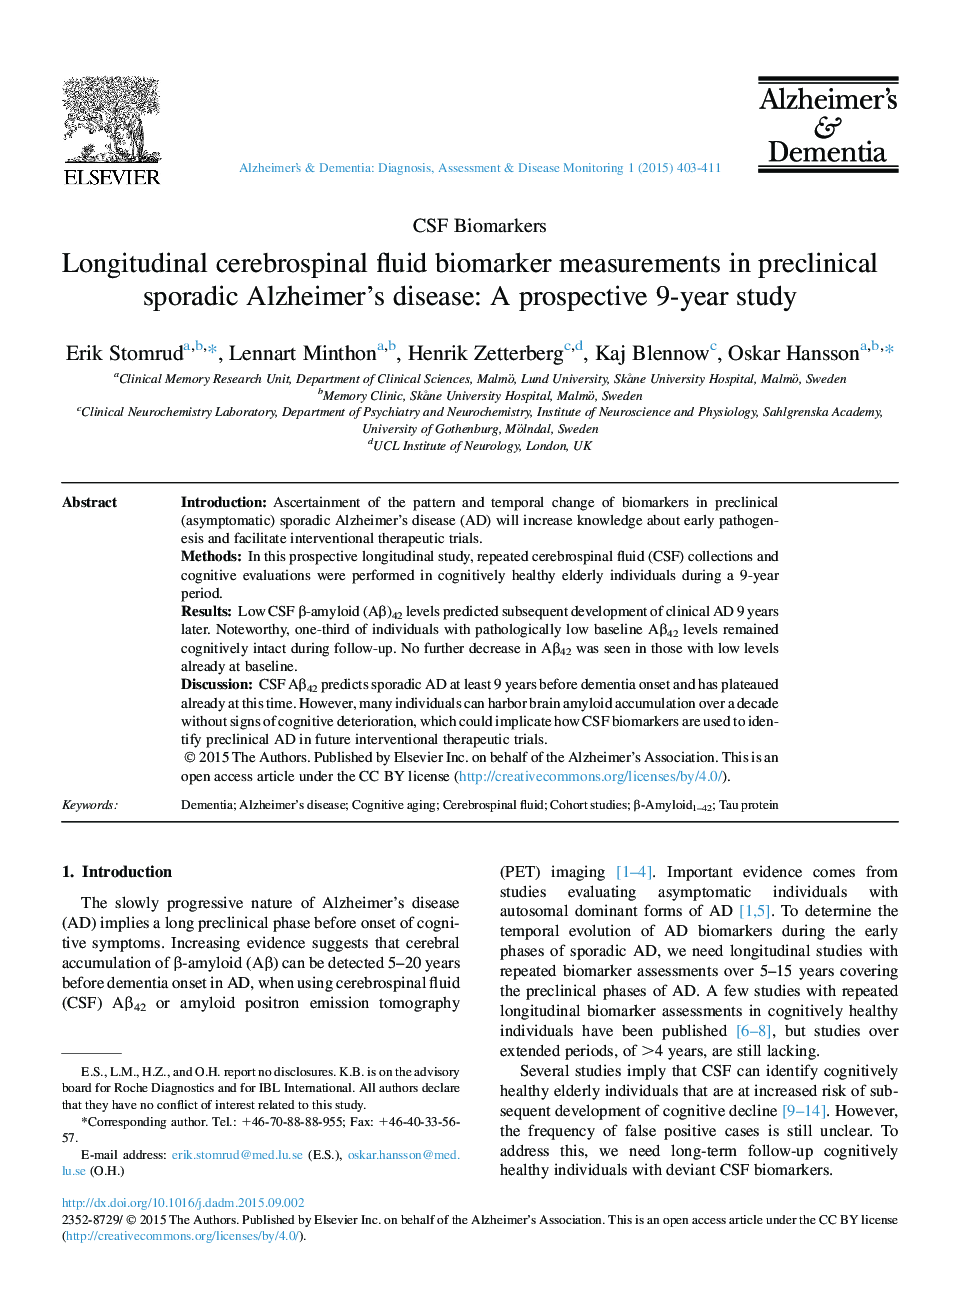 Longitudinal cerebrospinal fluid biomarker measurements in preclinical sporadic Alzheimer's disease: A prospective 9-year study 